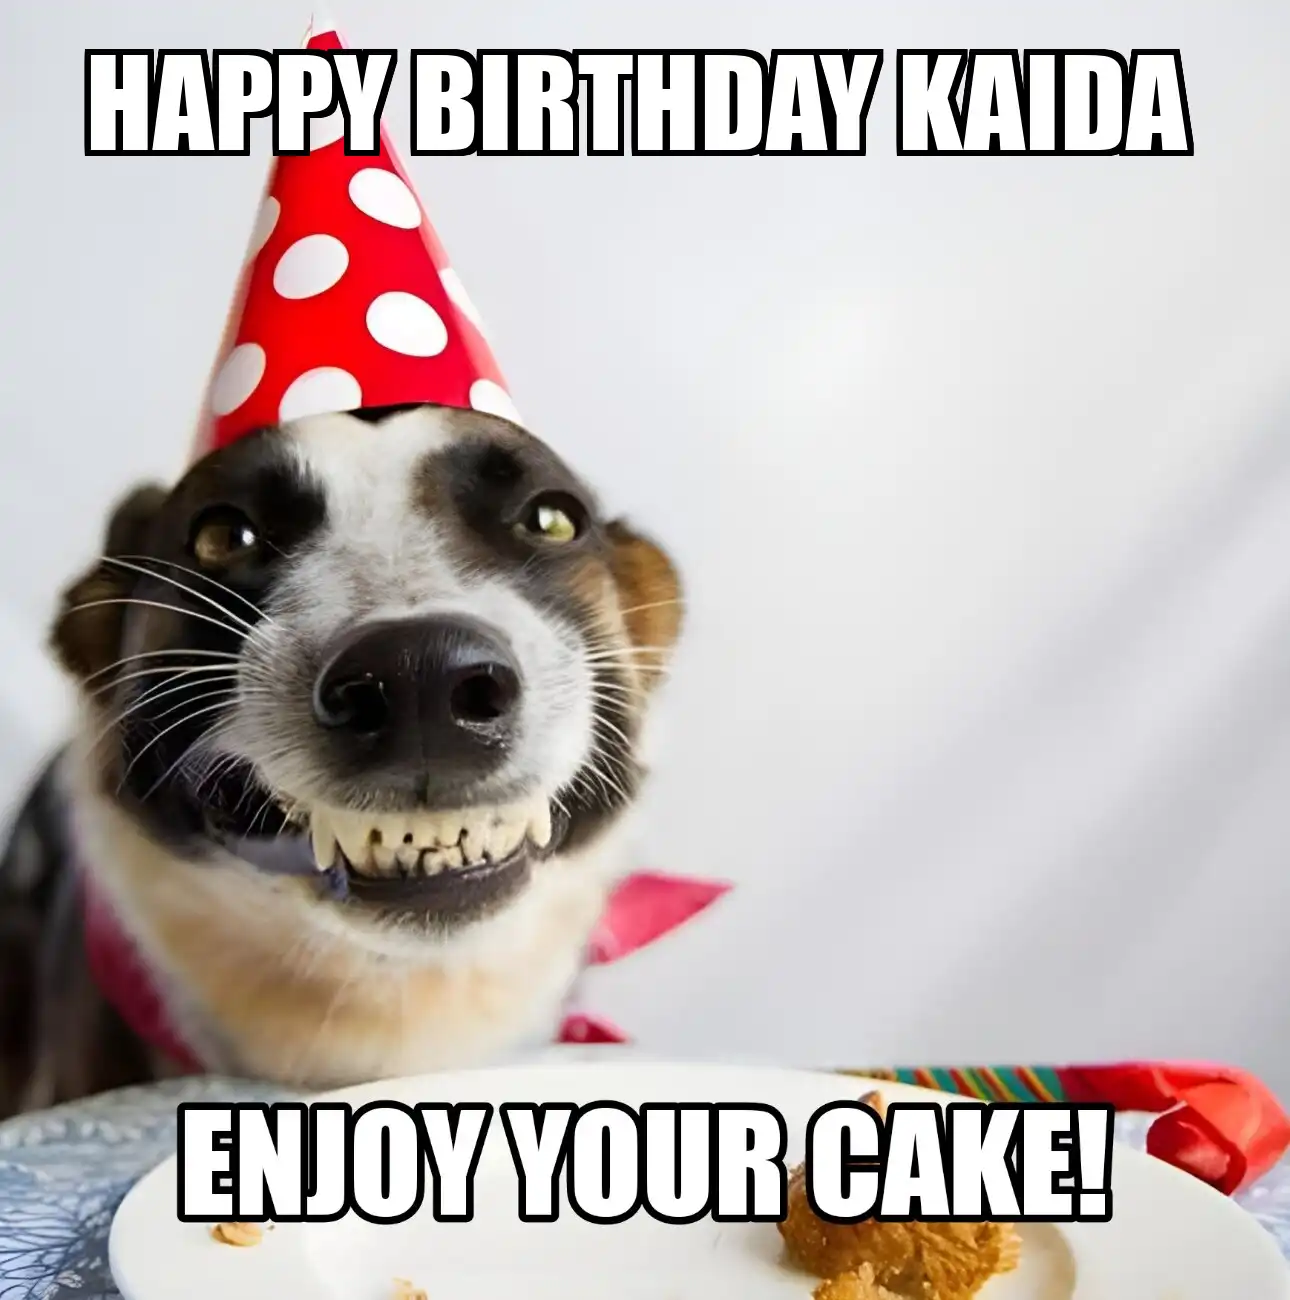 Happy Birthday Kaida Enjoy Your Cake Dog Meme